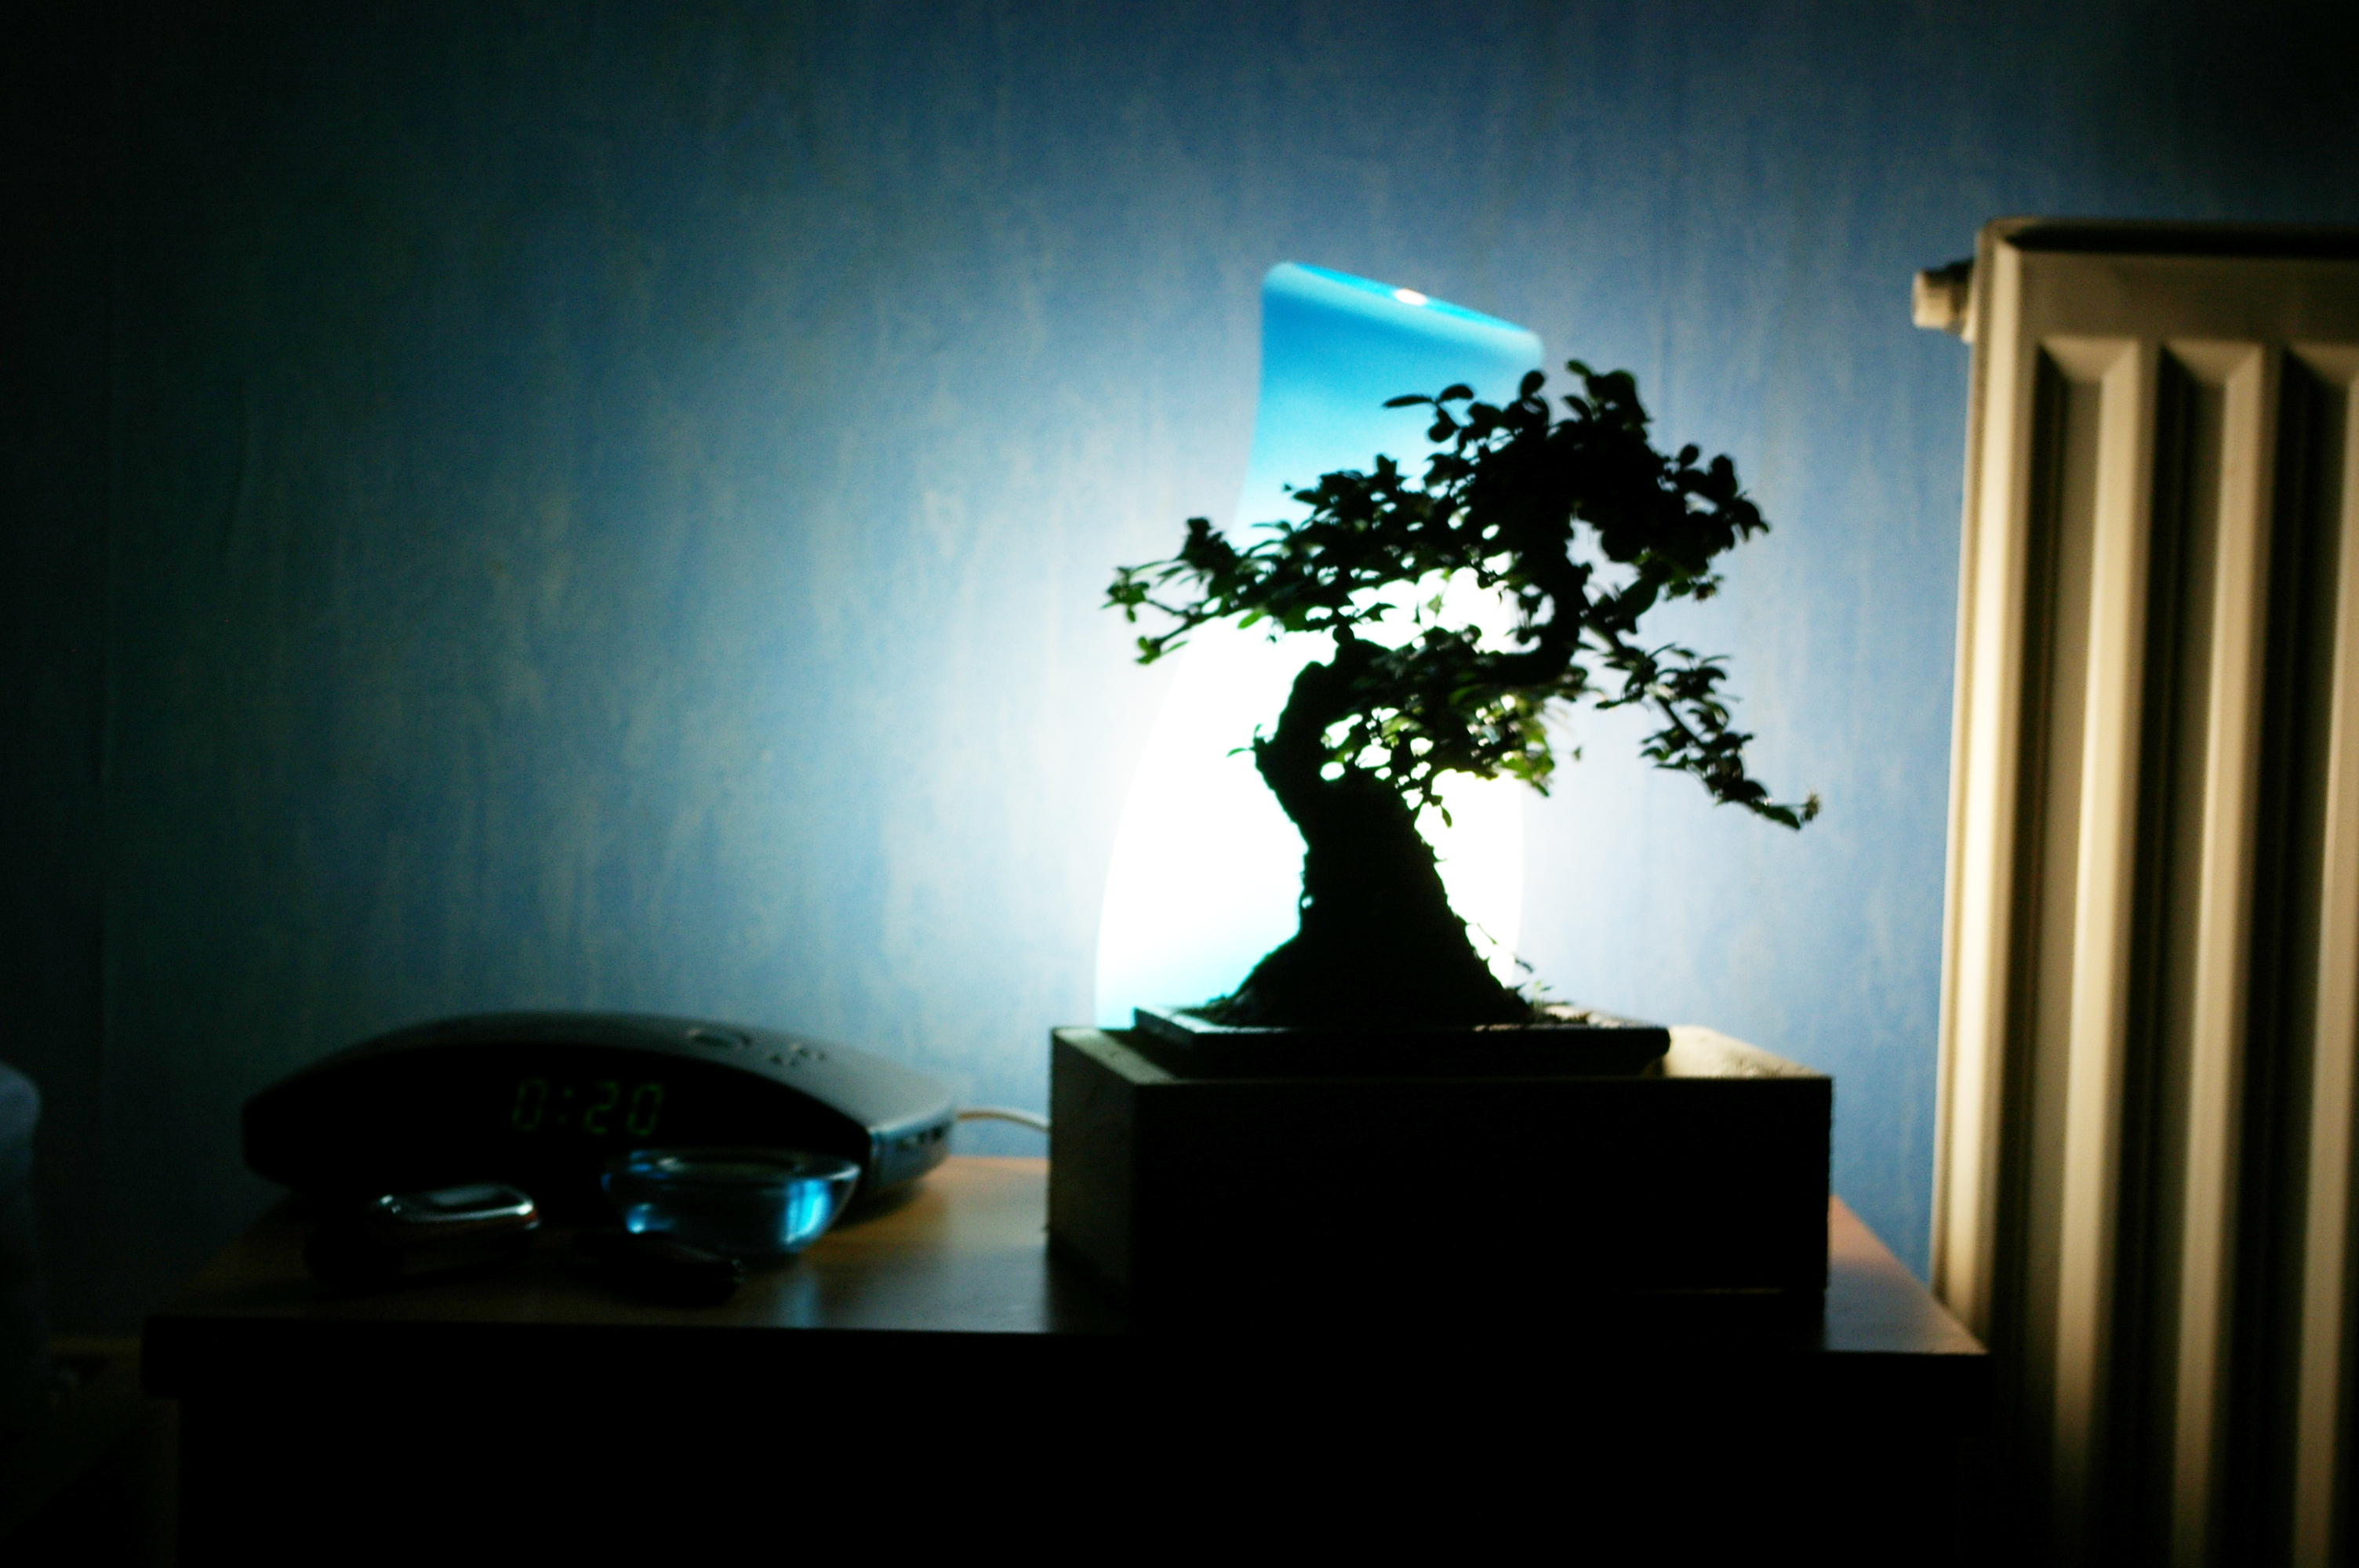 Banzai tree in the room photo